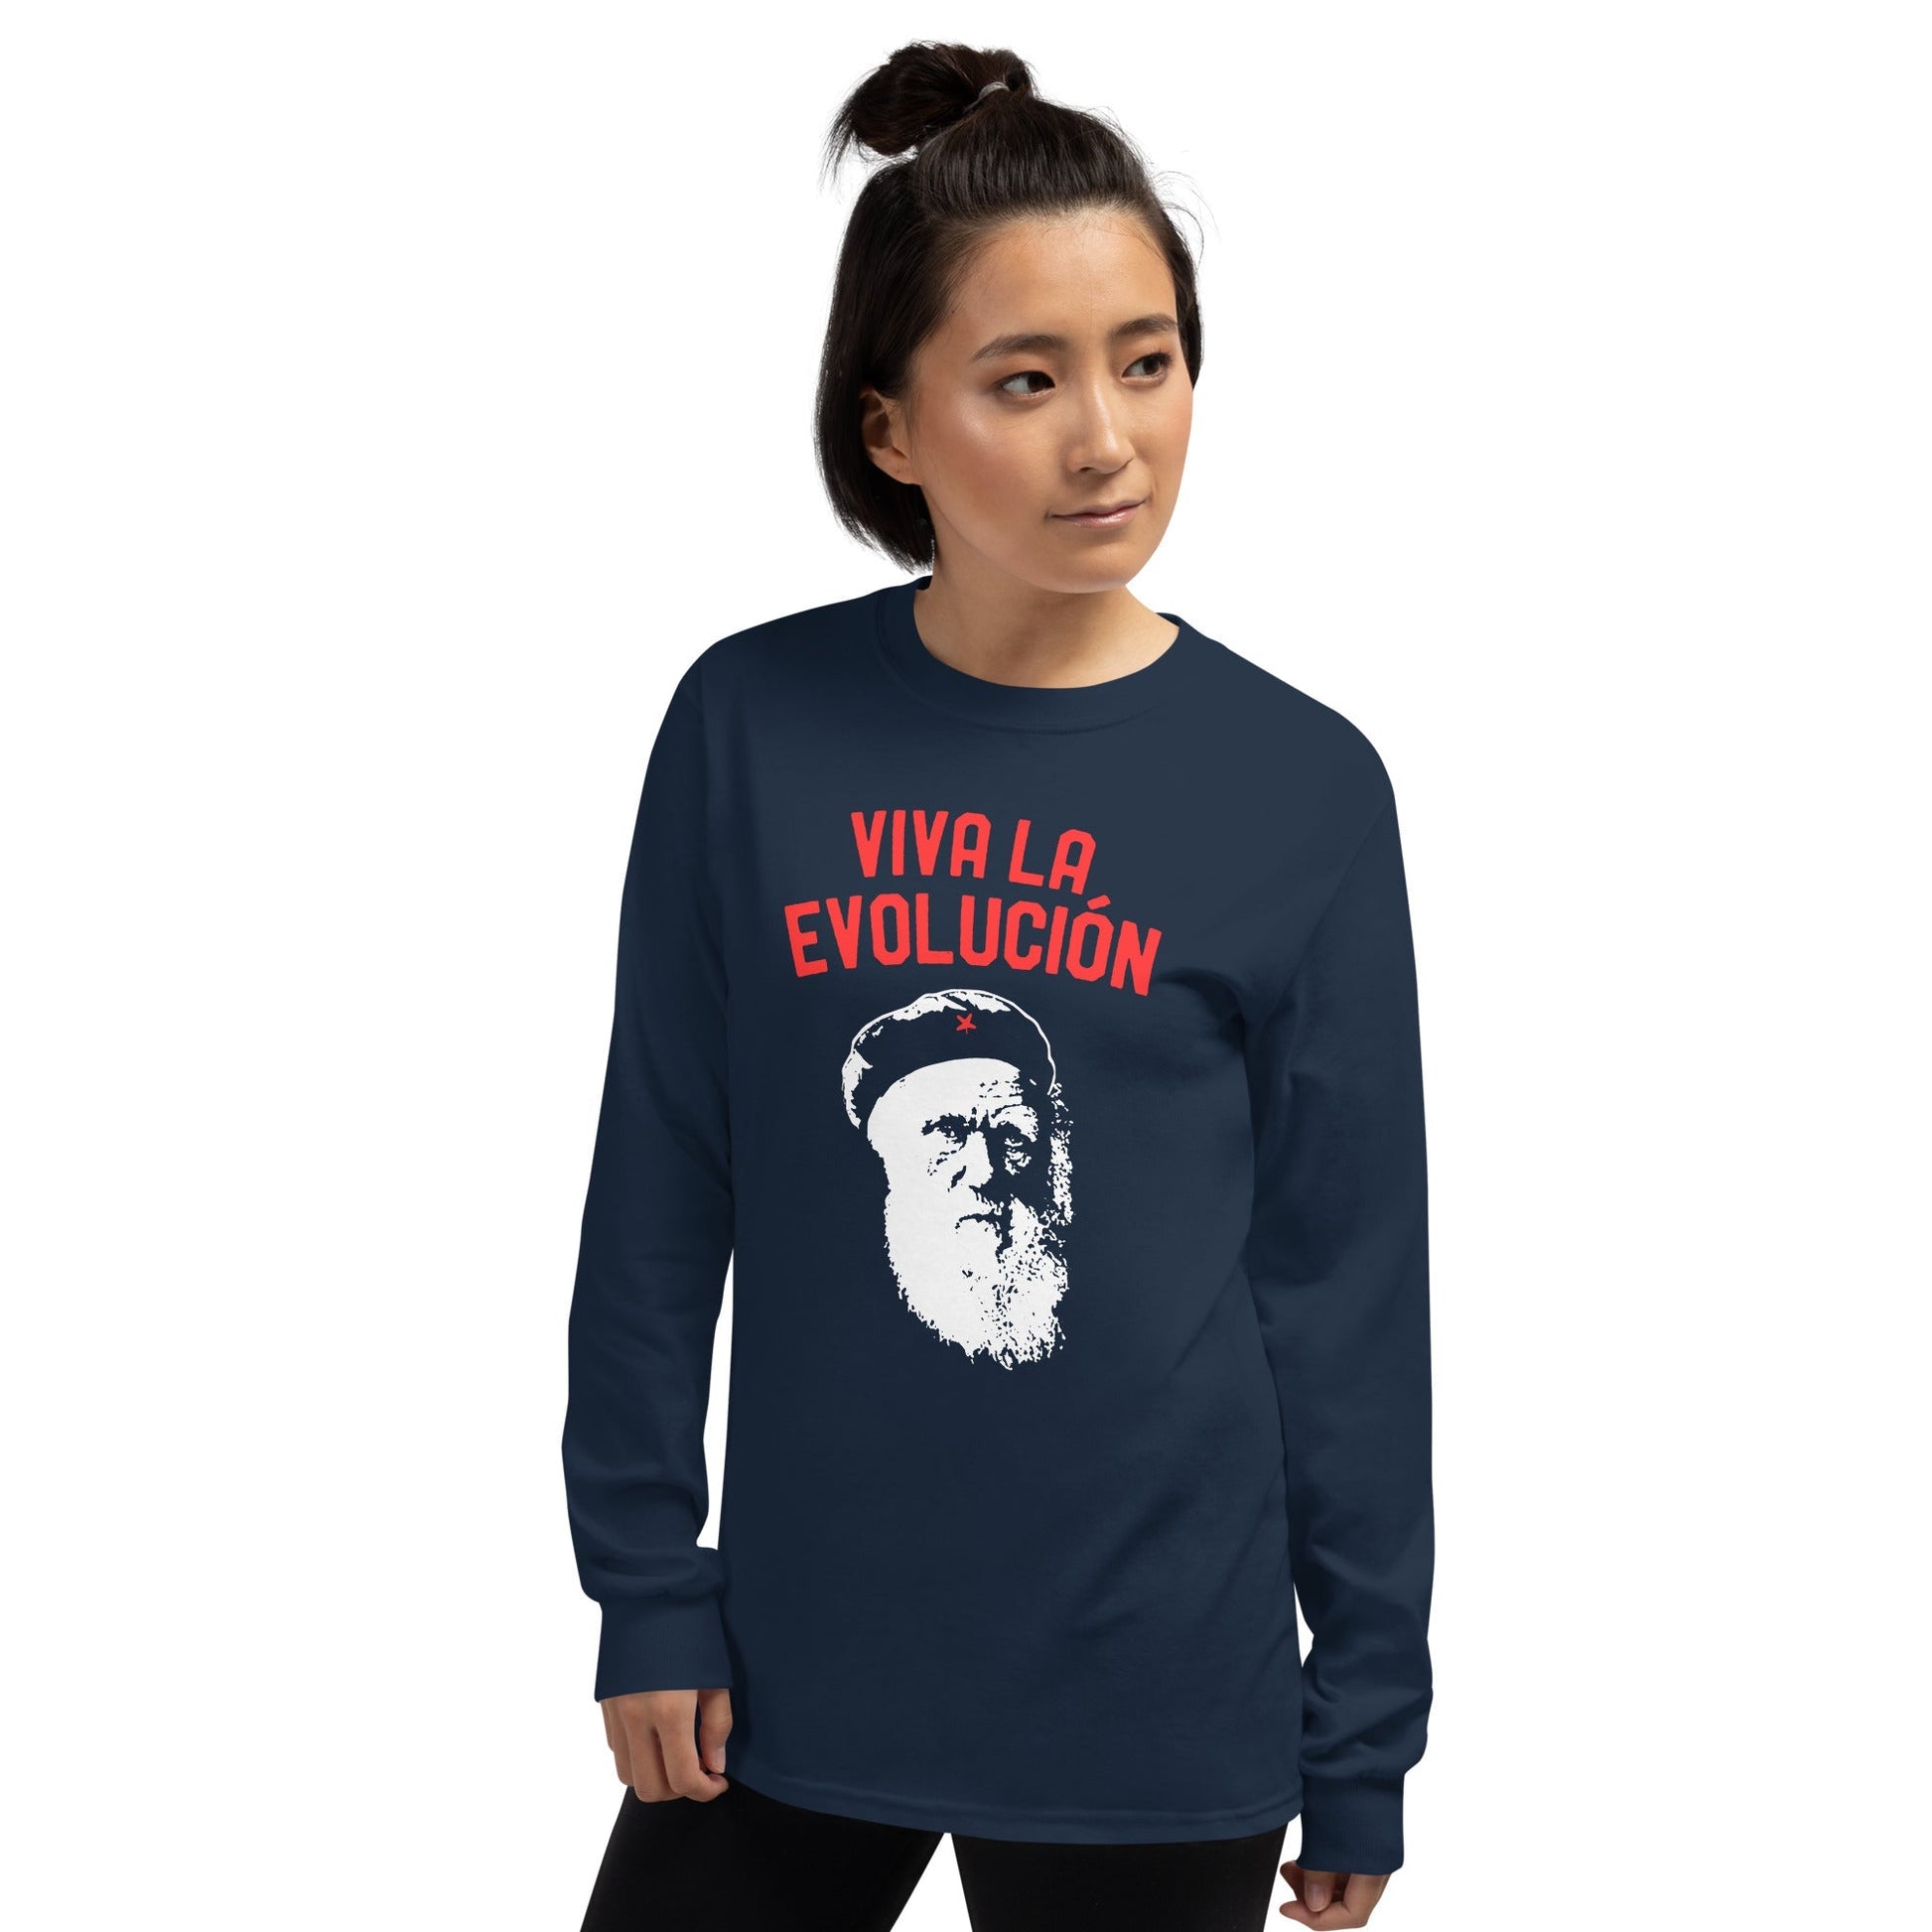 Darwin - Viva la Evolucion - Long-Sleeved Shirt